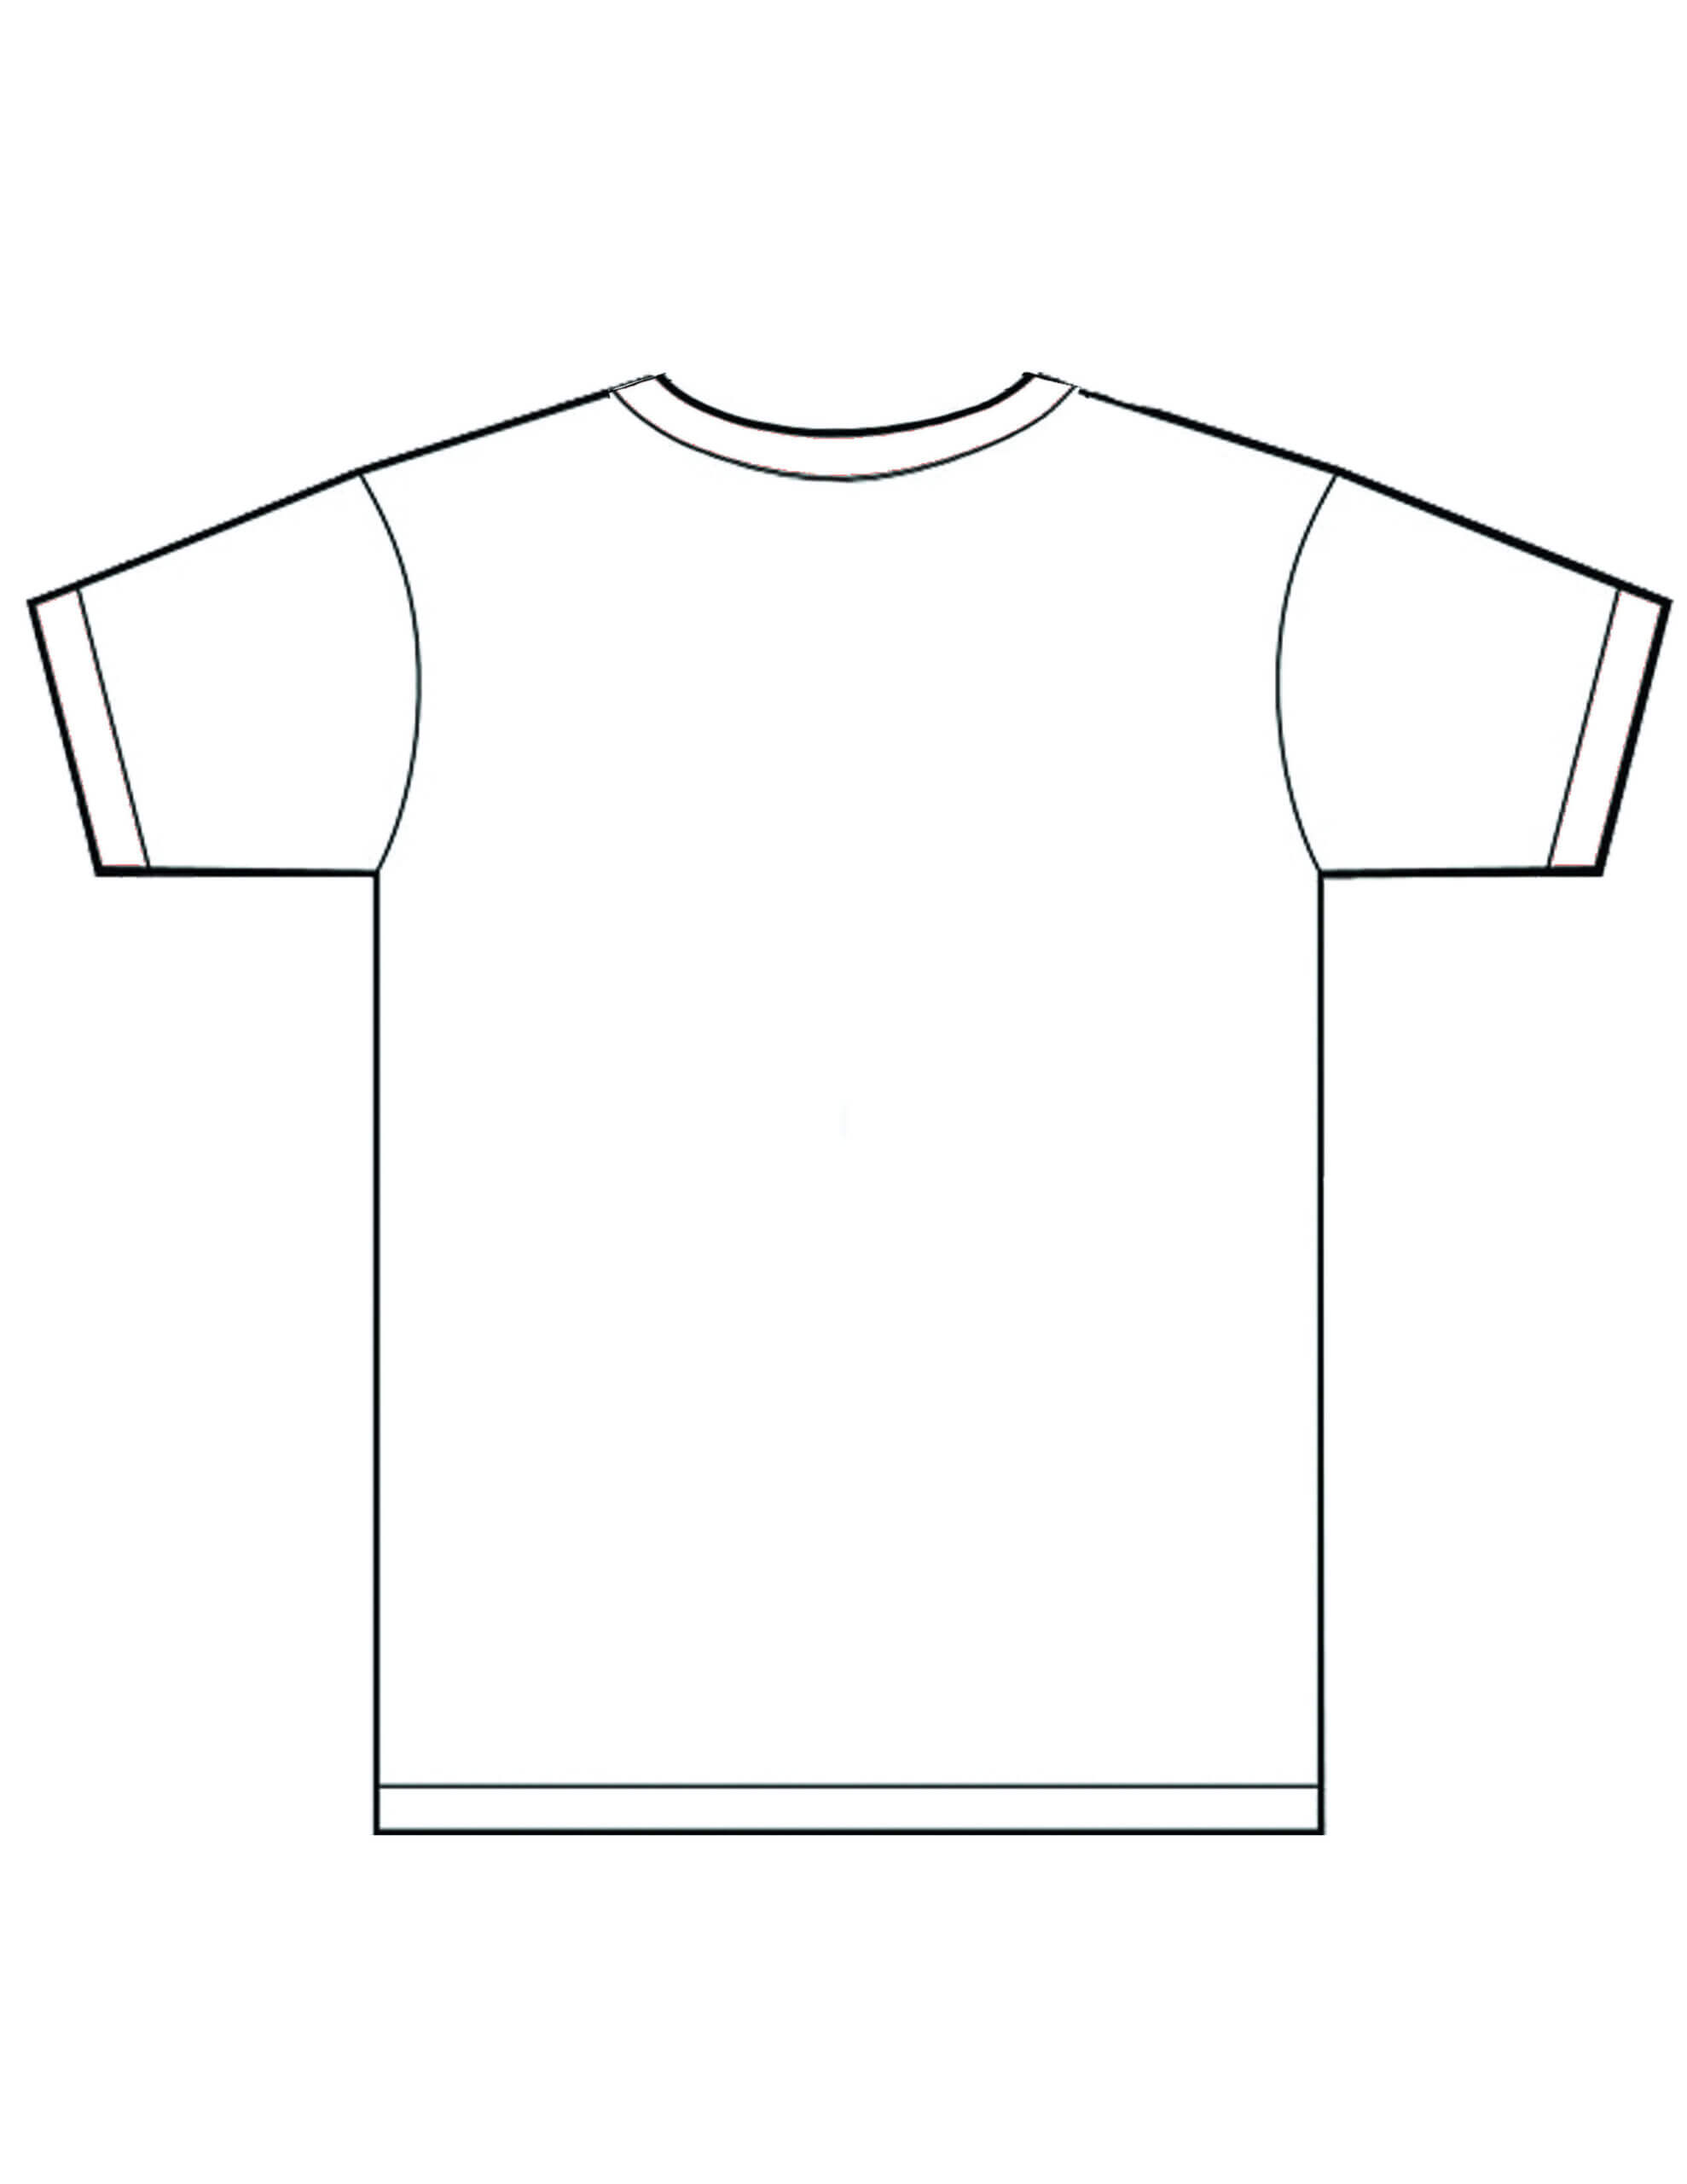 Blank Shirt Template Pdf | Coolmine Community School Pertaining To Blank Tshirt Template Pdf